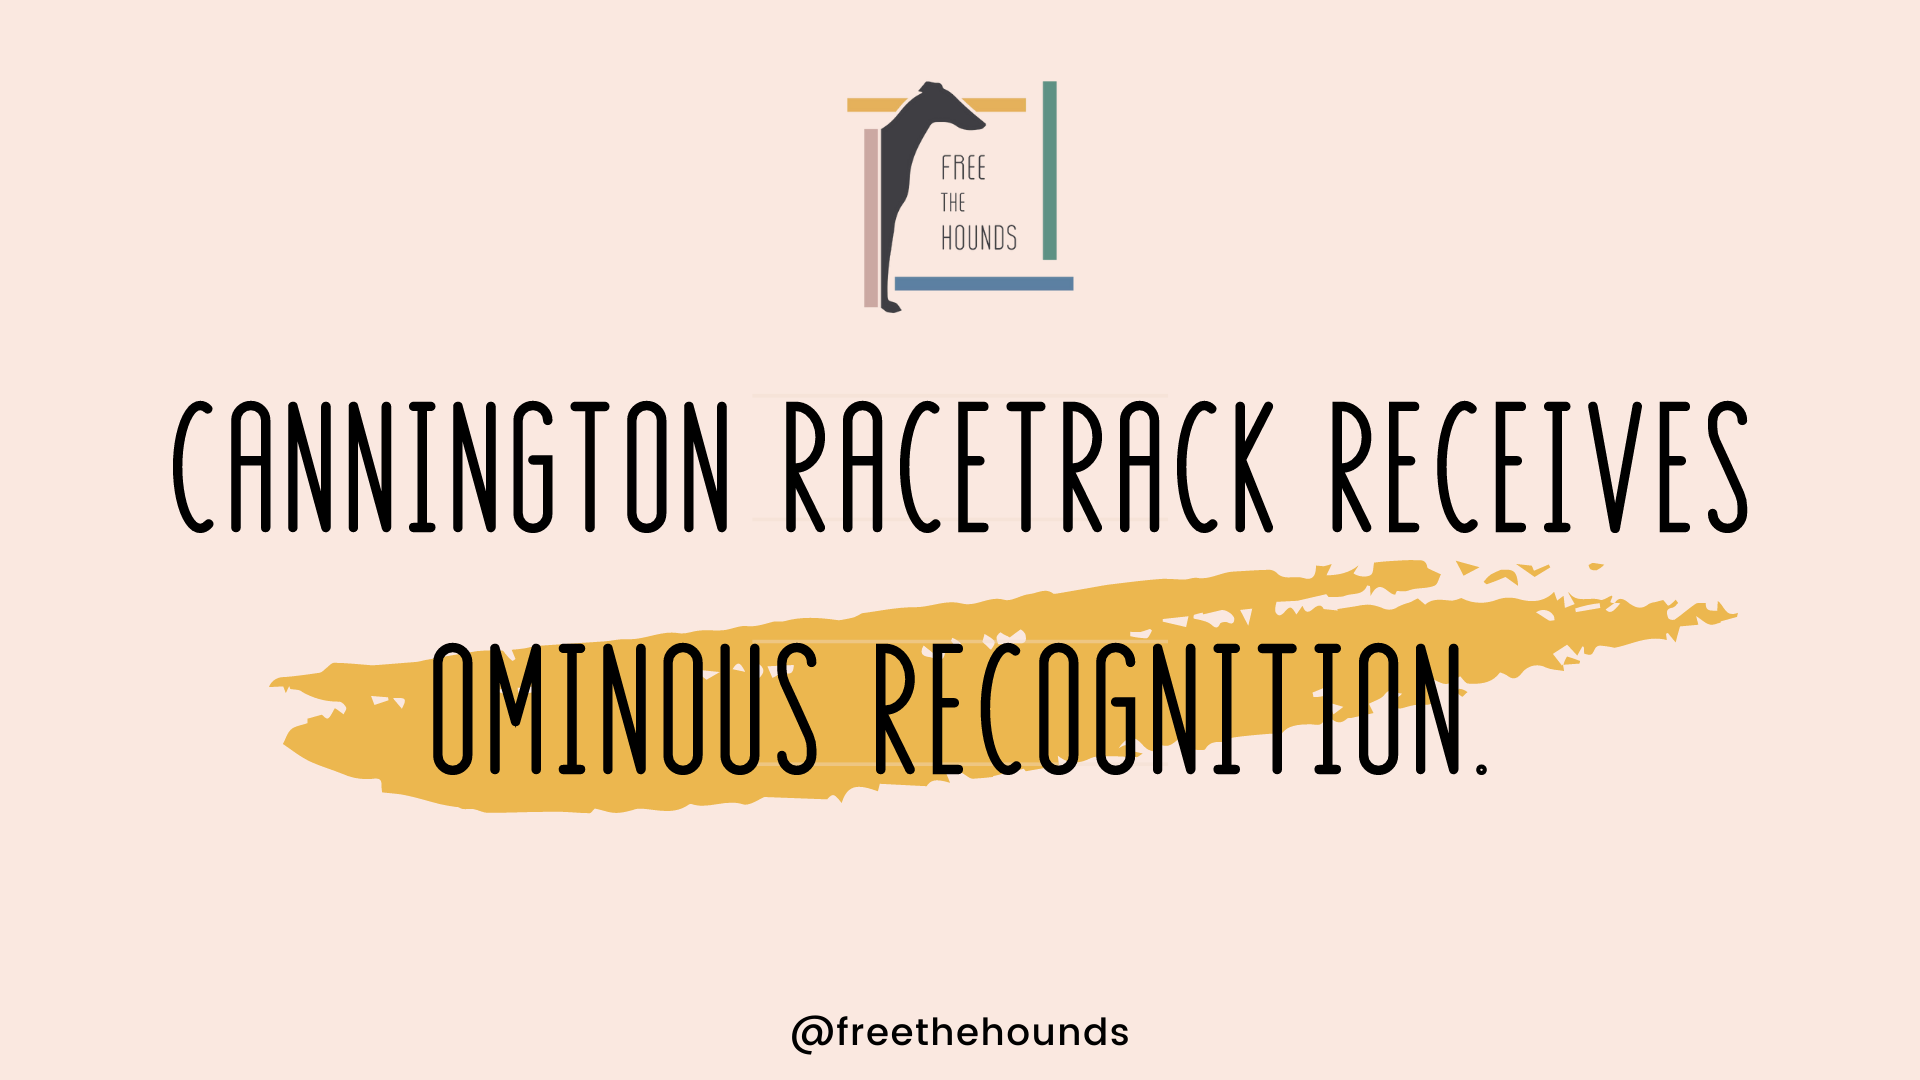 Cannington racetrack receives ominous recognition.